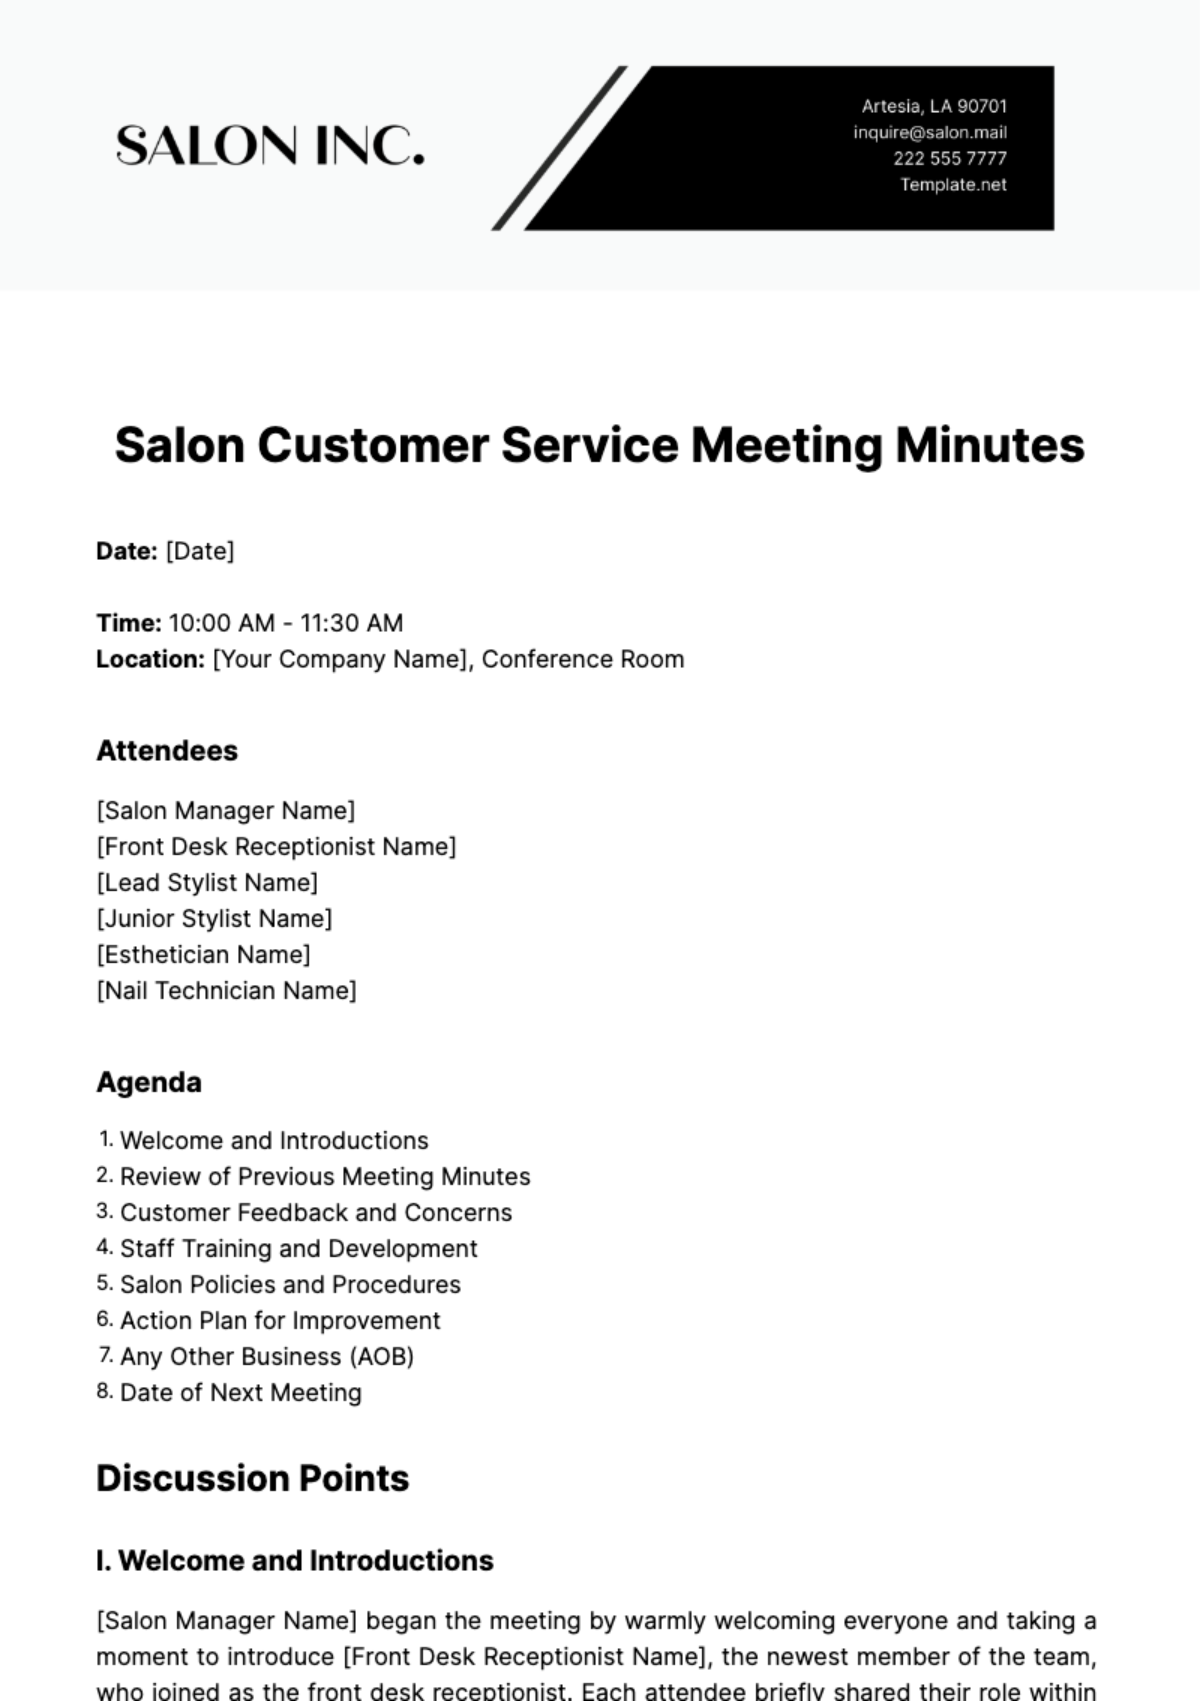 Free Salon Customer Service Meeting Minute Template